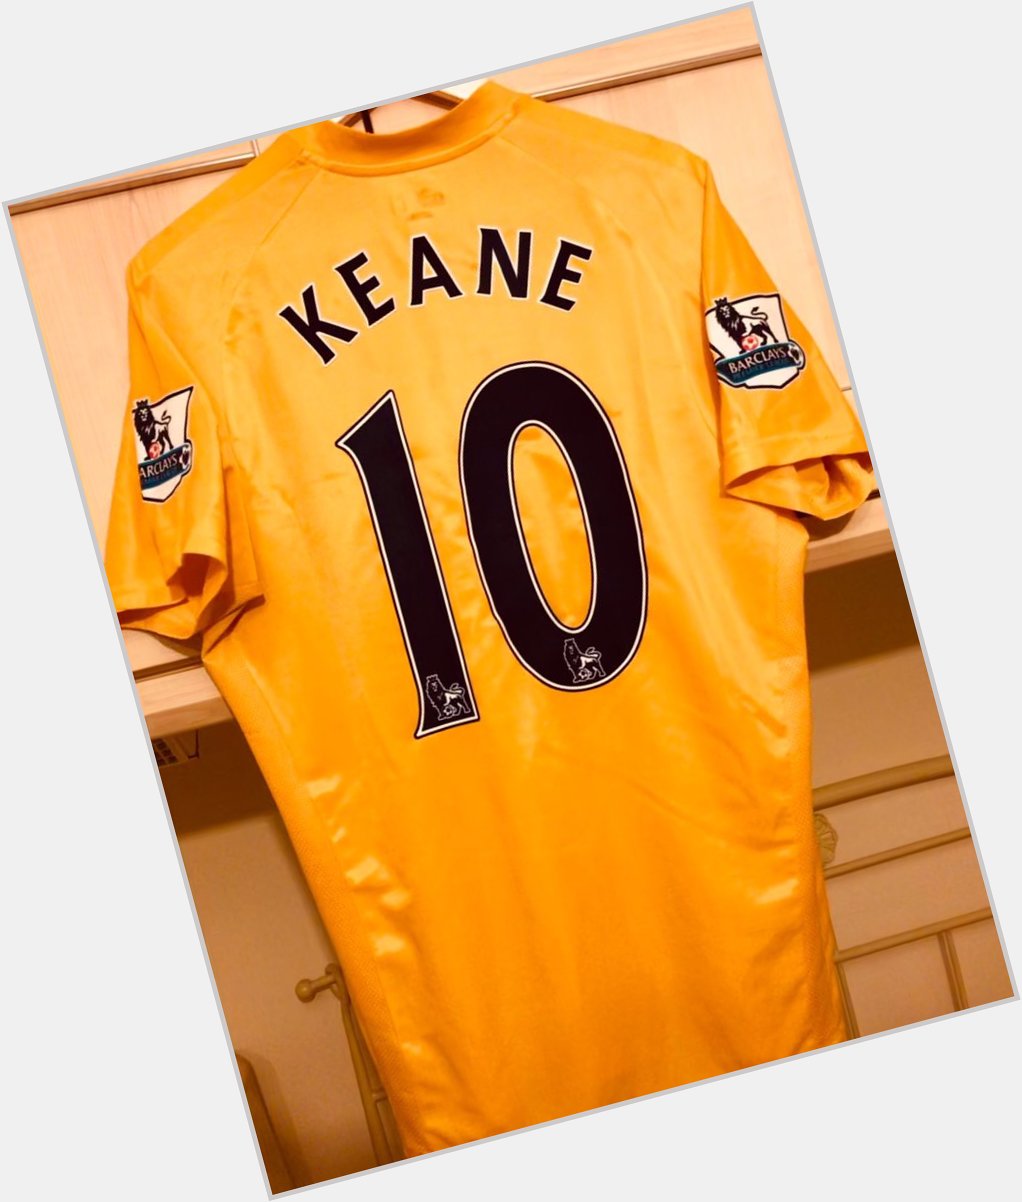 Happy birthday Robbie Keane! 